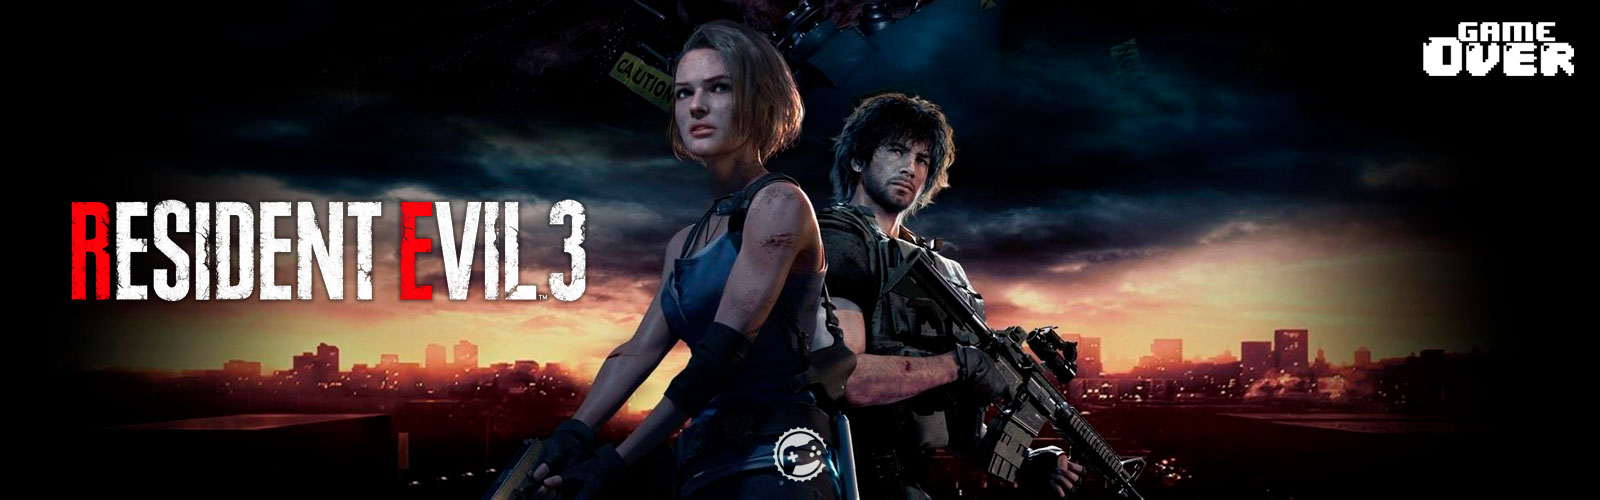 Análise - Resident Evil 3 (PS4) Cover